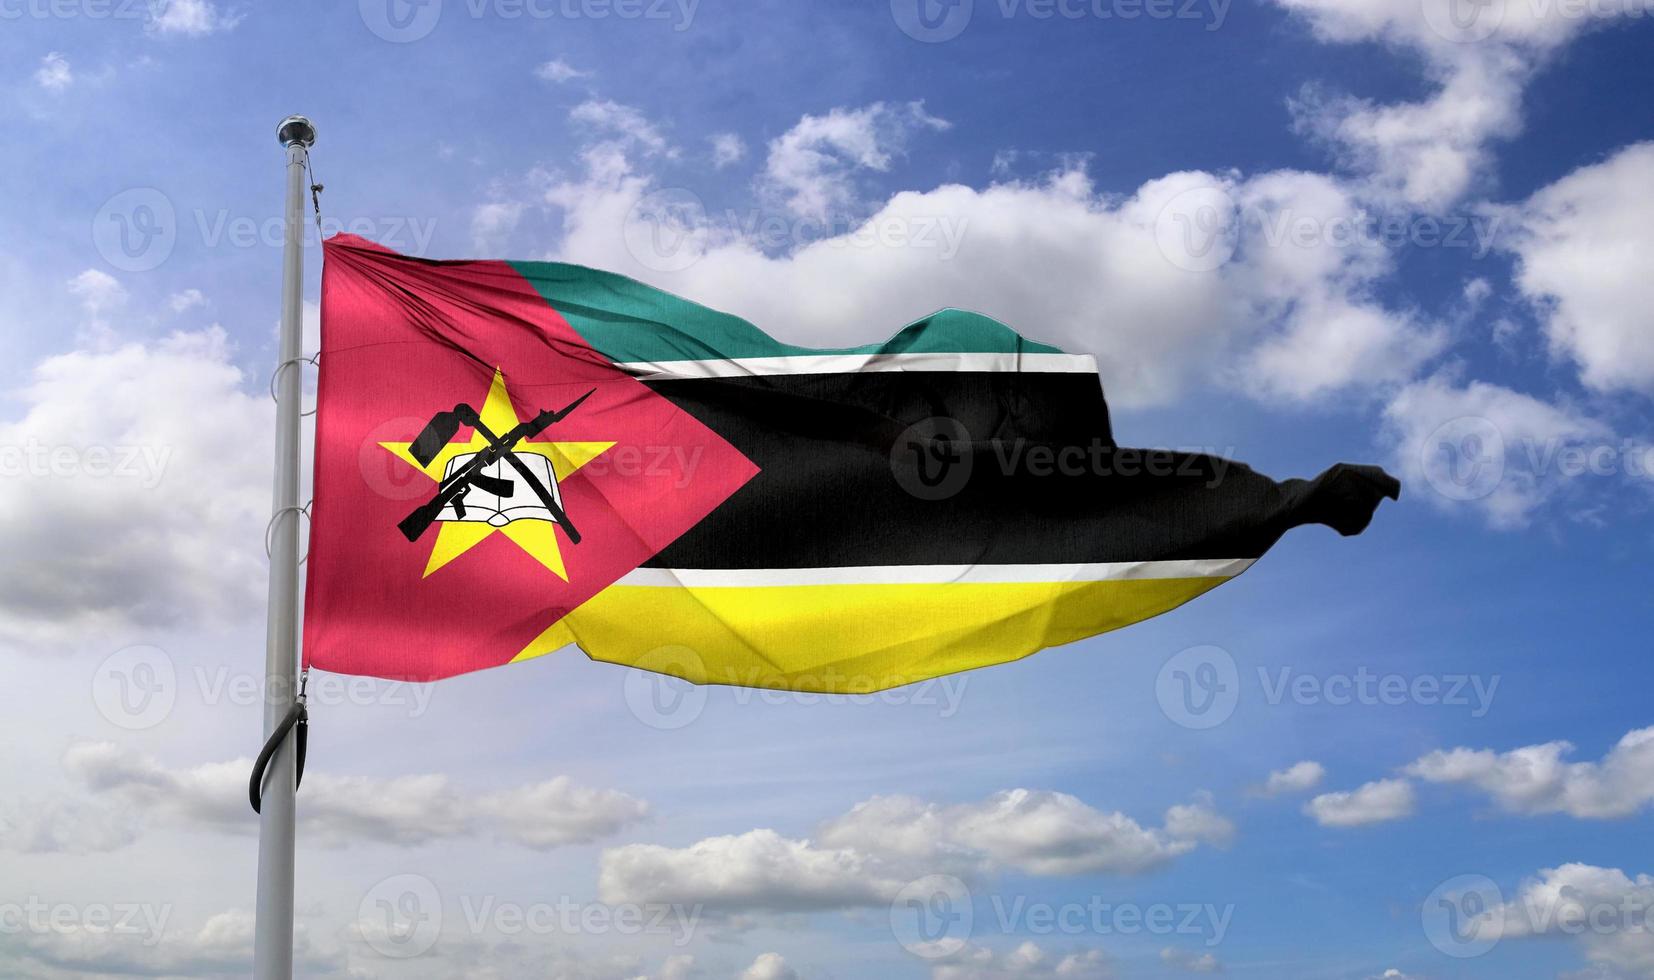 moçambique flagga - realistiskt viftande tygflagga. foto